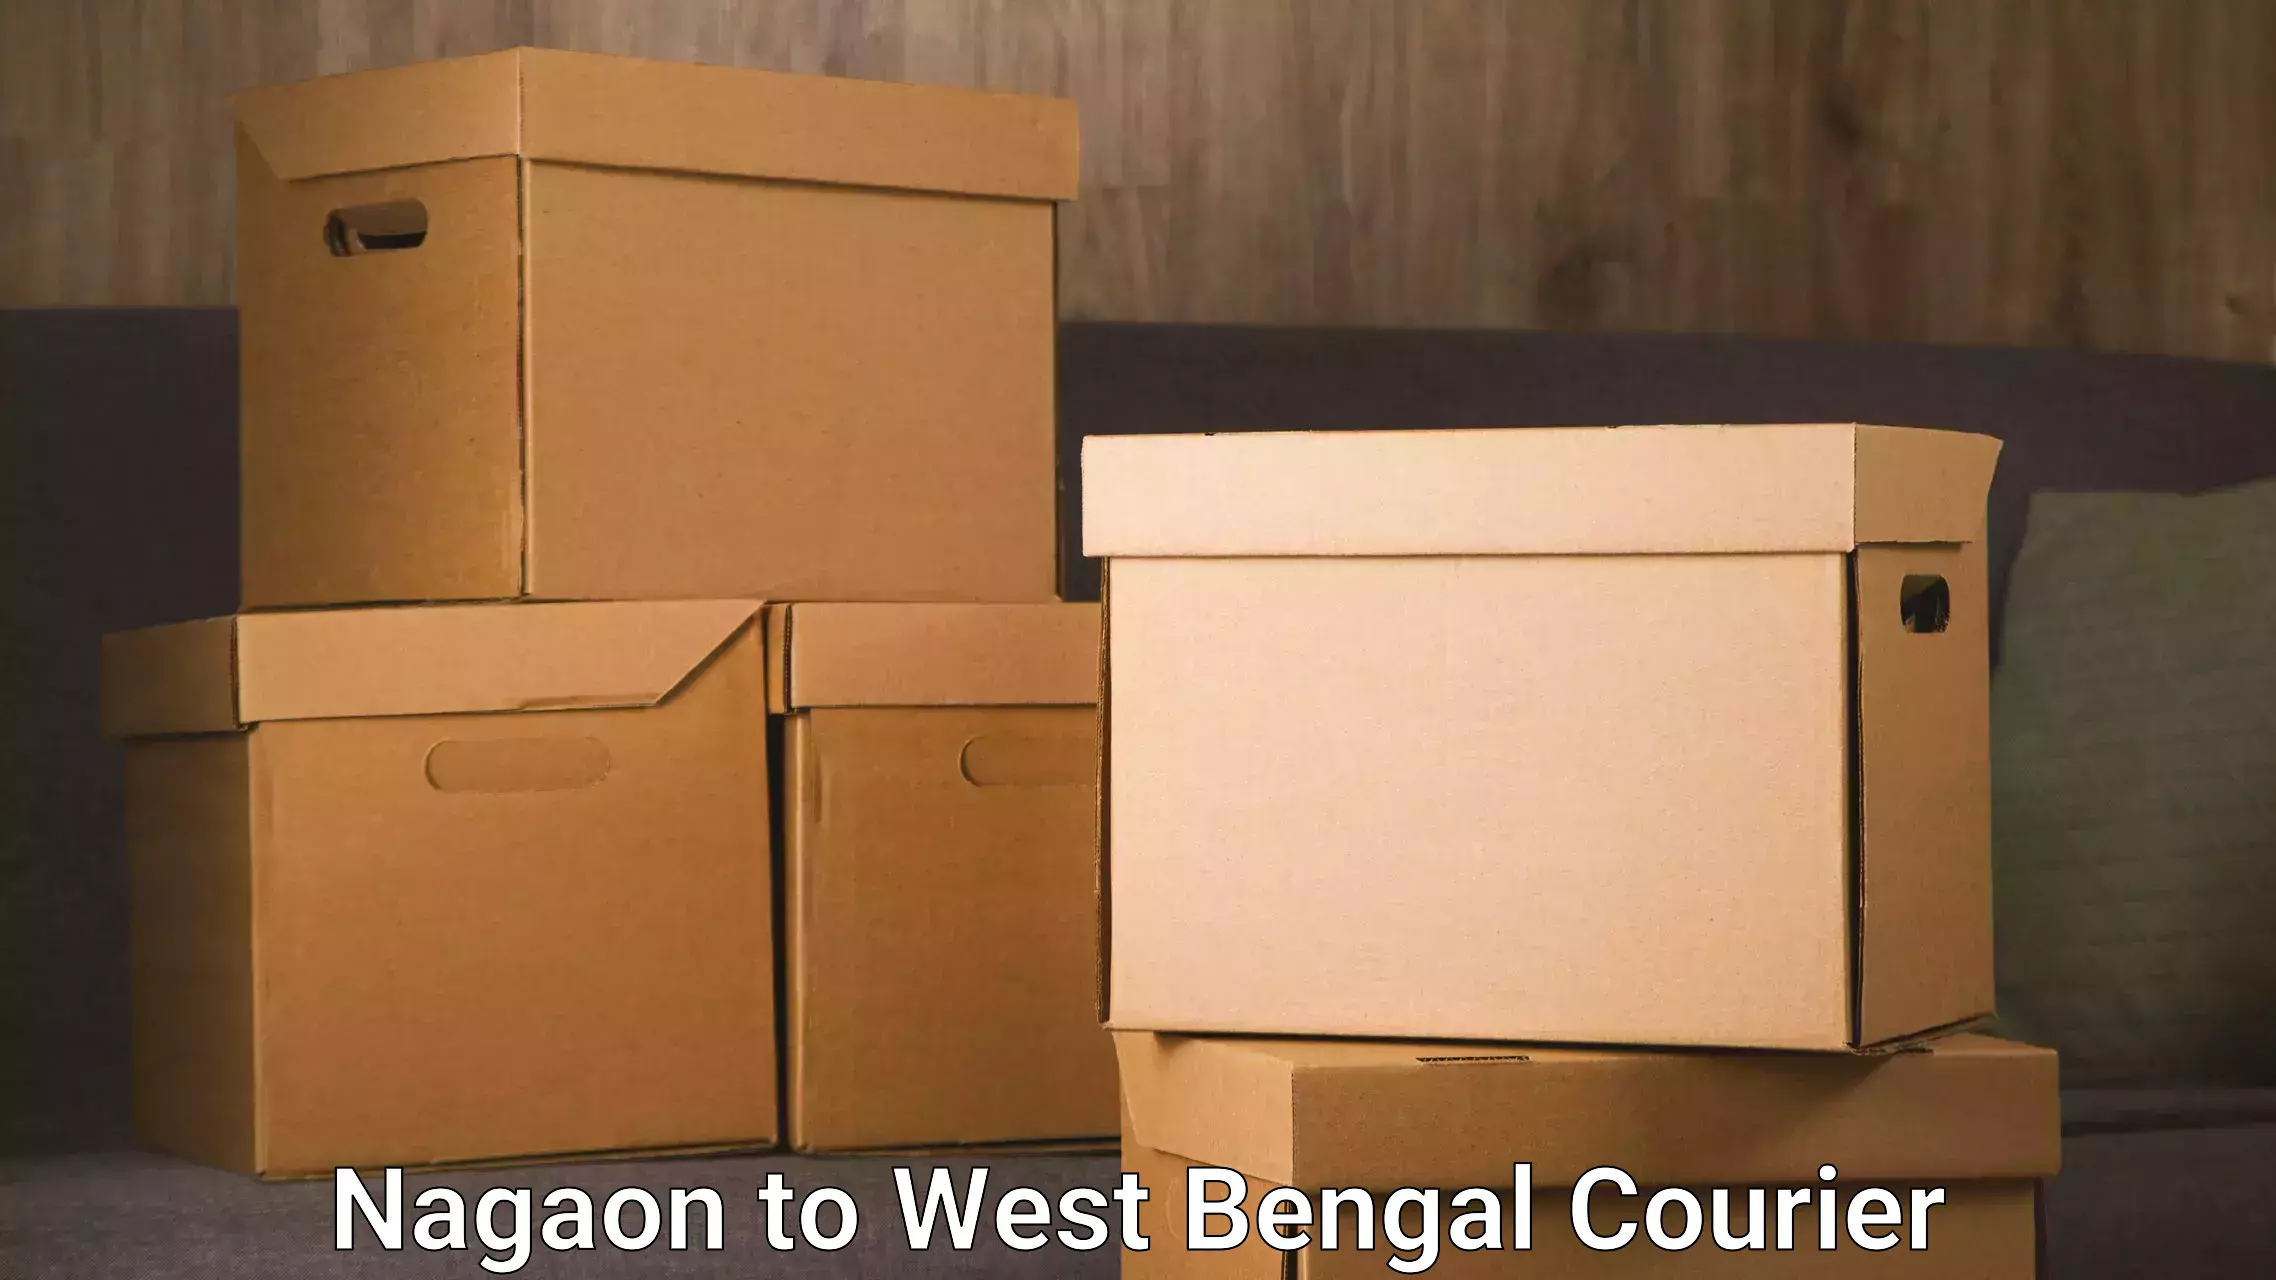 Digital courier platforms Nagaon to West Bengal